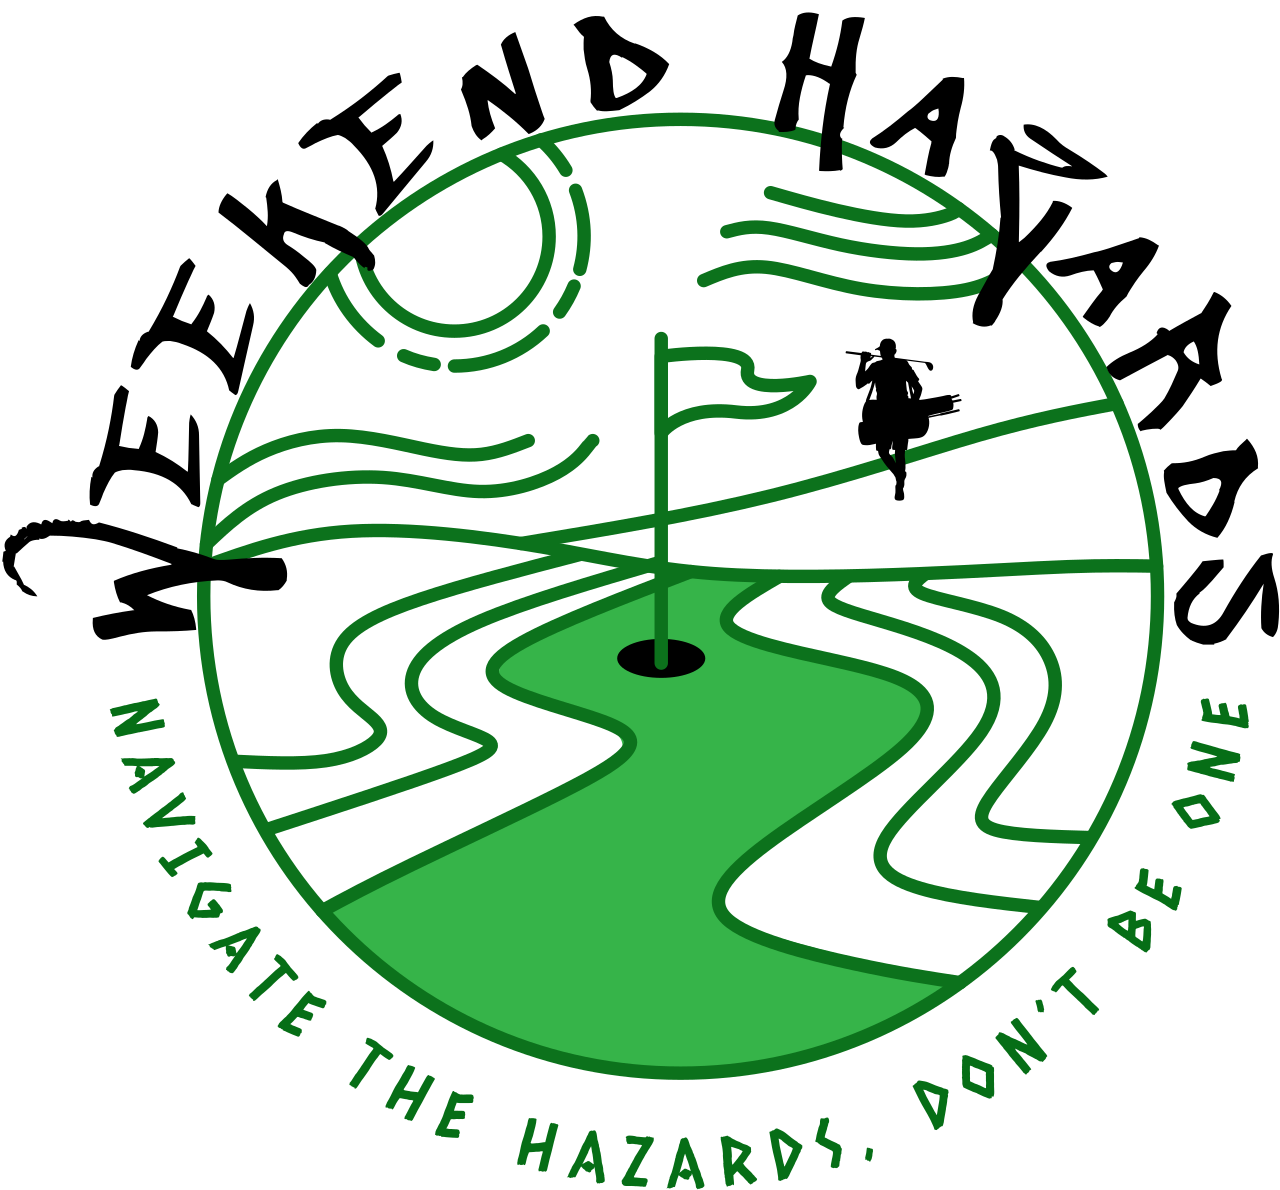 WEEKEND HAZARDS's logo